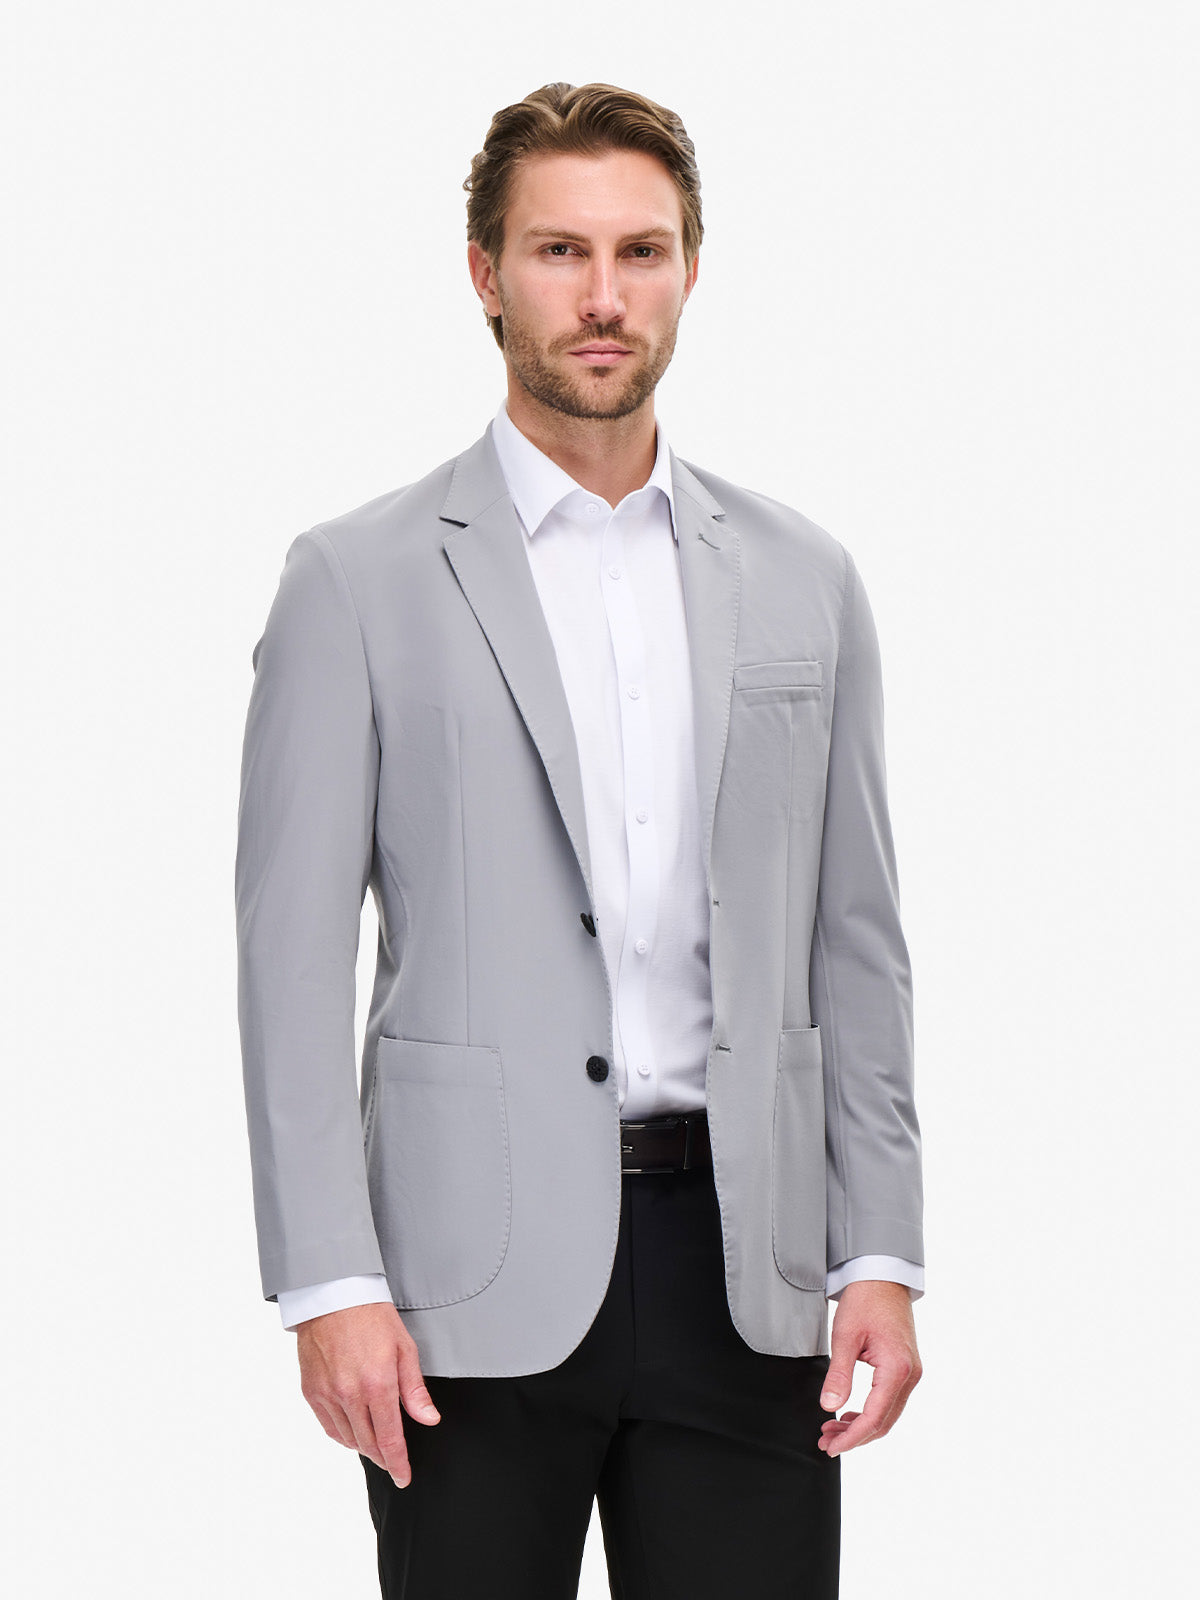 xJacket Air - Grey  Ultra Lightweight Men's Suit Jacket